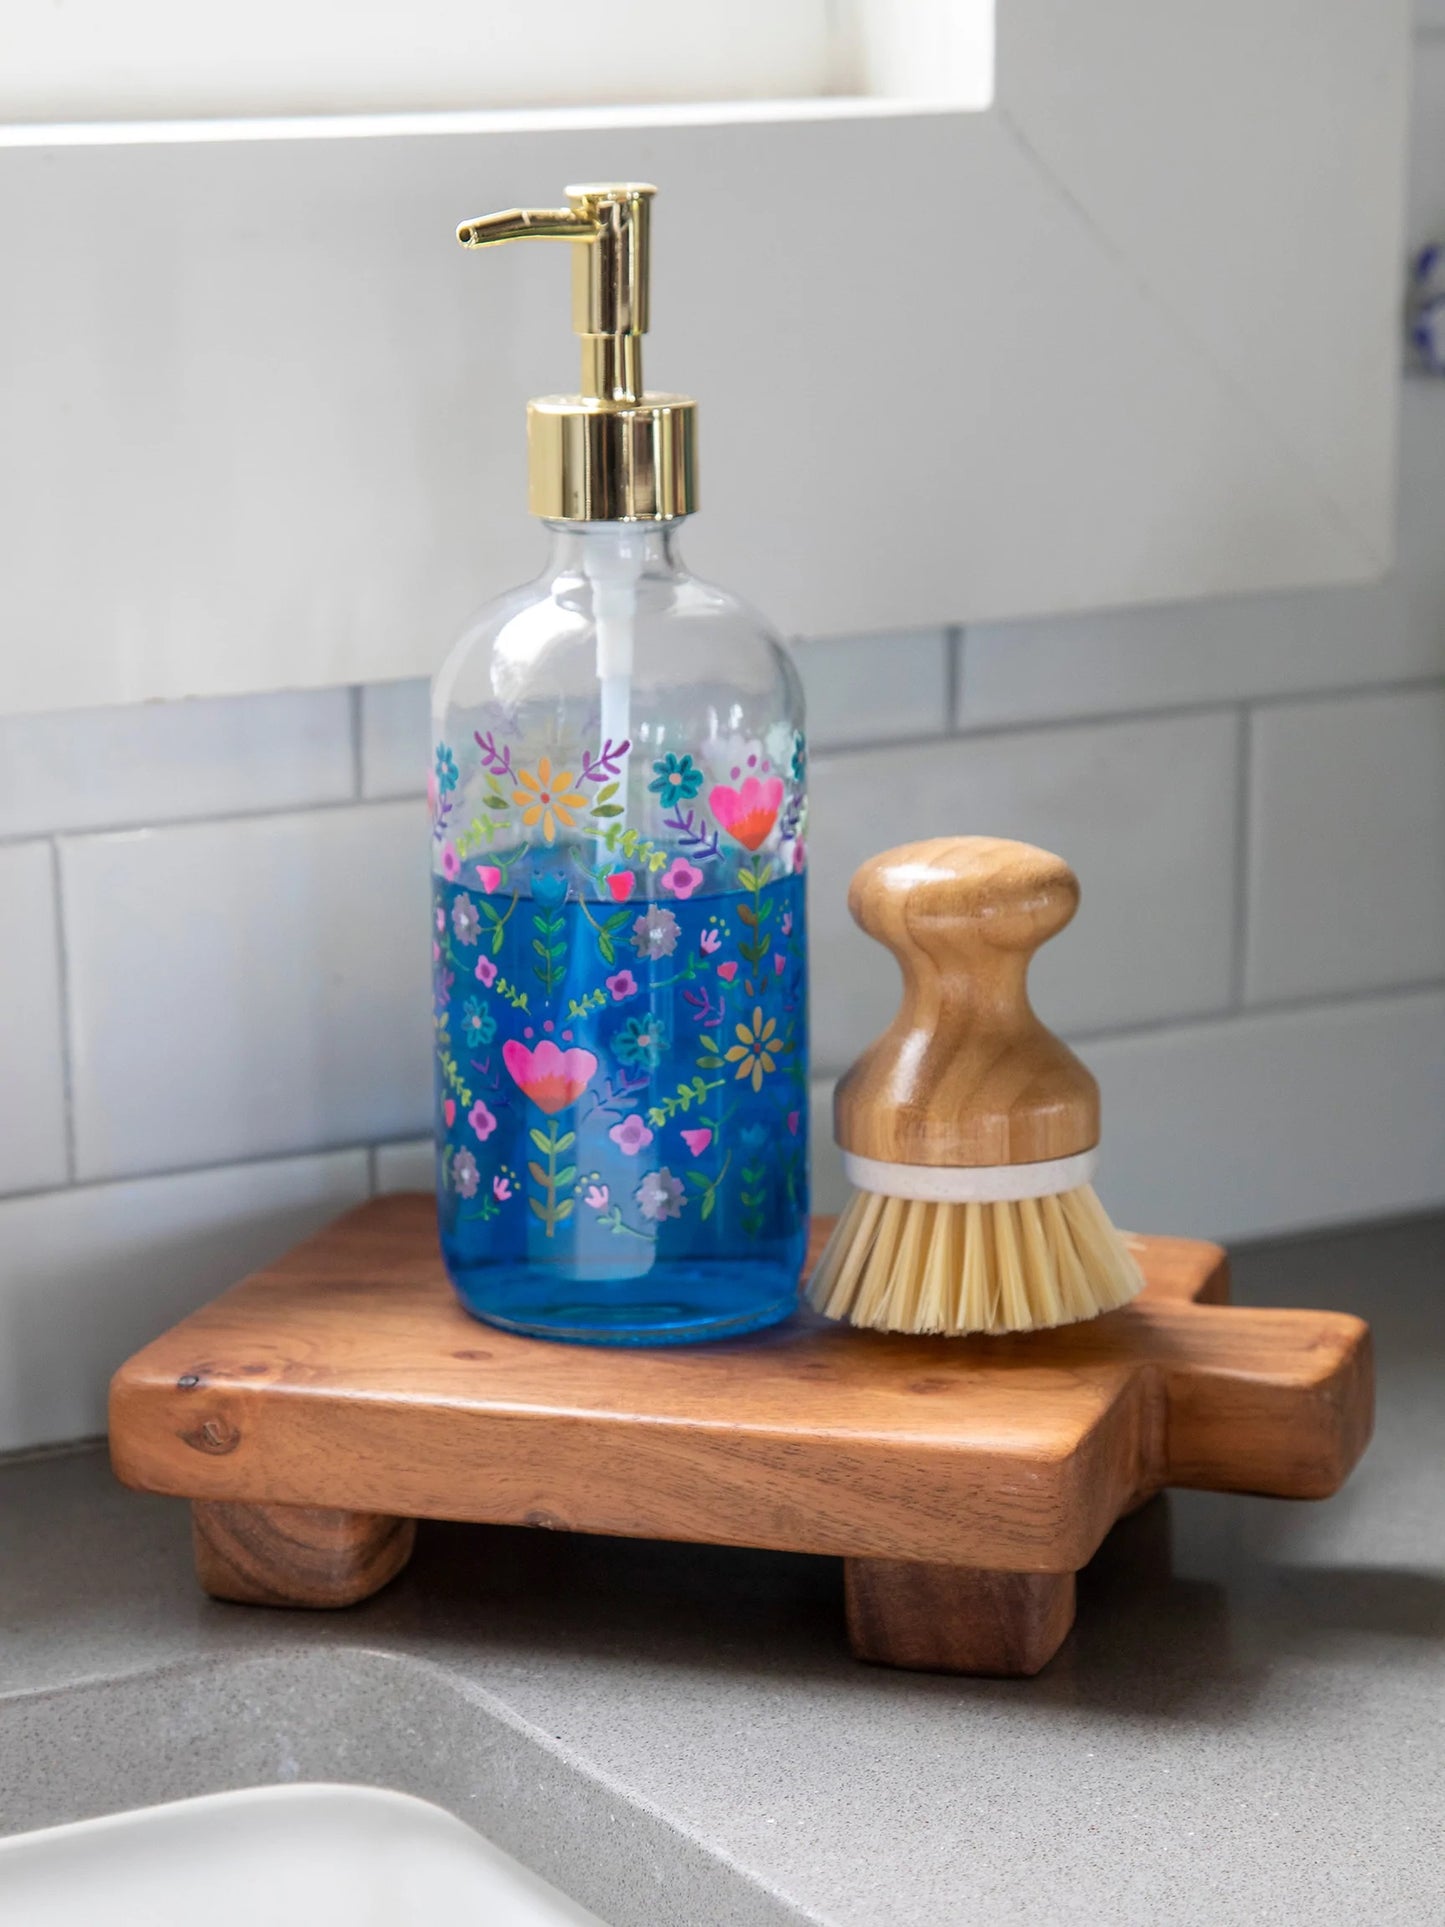 Glass Floral Soap Dispenser